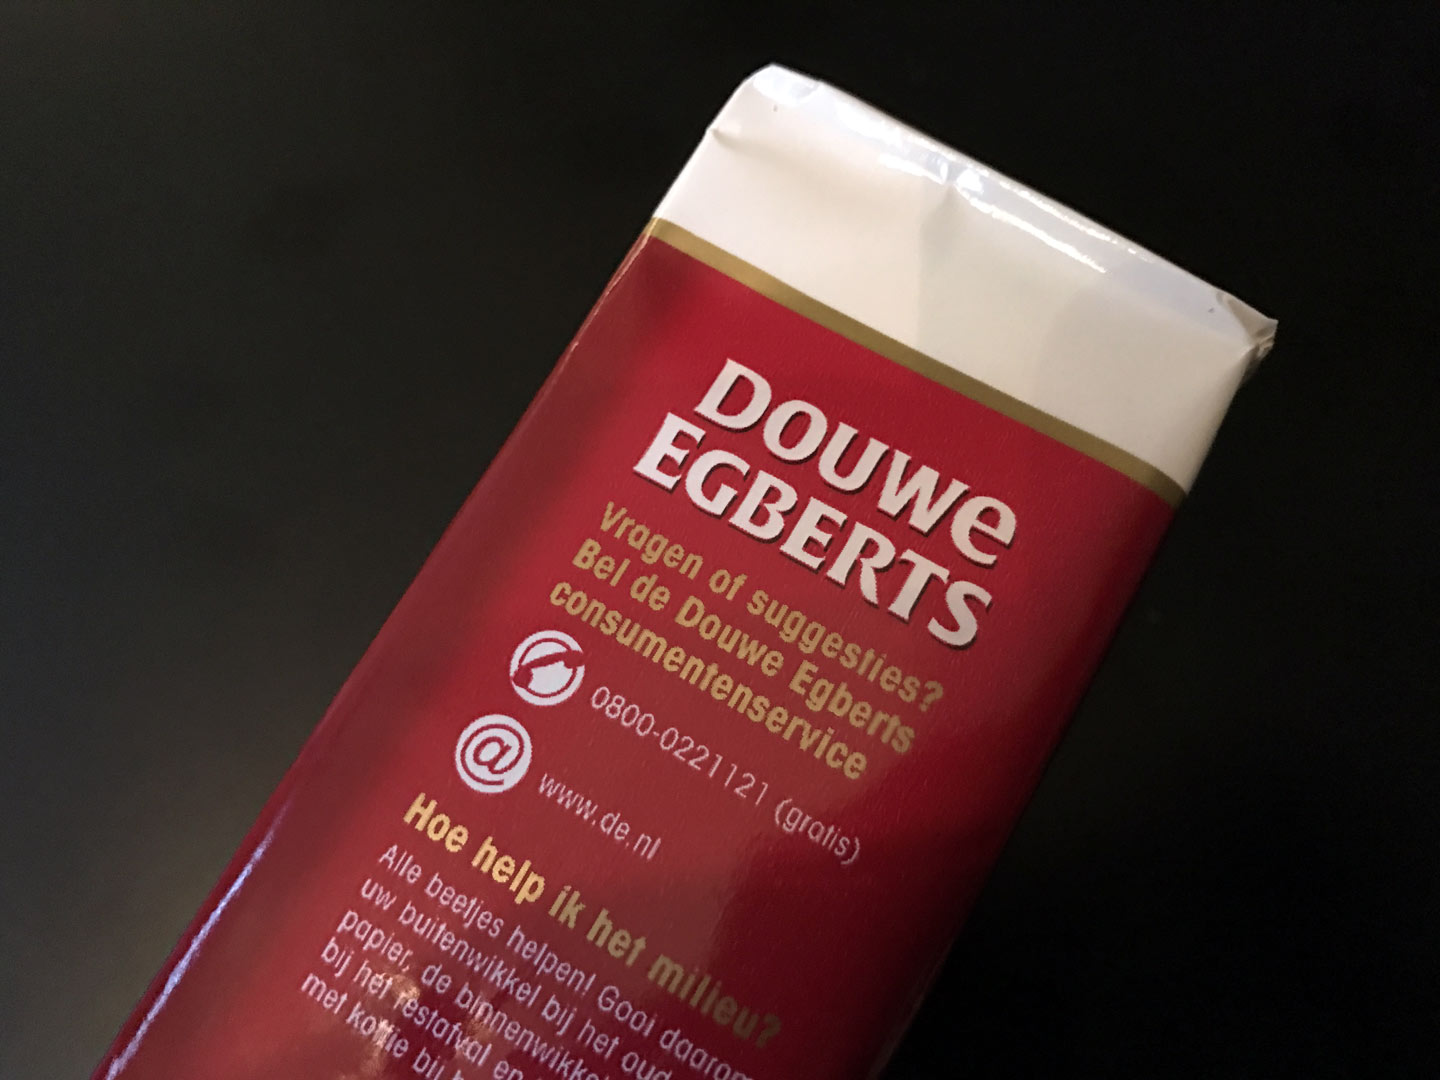 Opname Beneden afronden forum Douwe Egberts packaging | TypeTogether